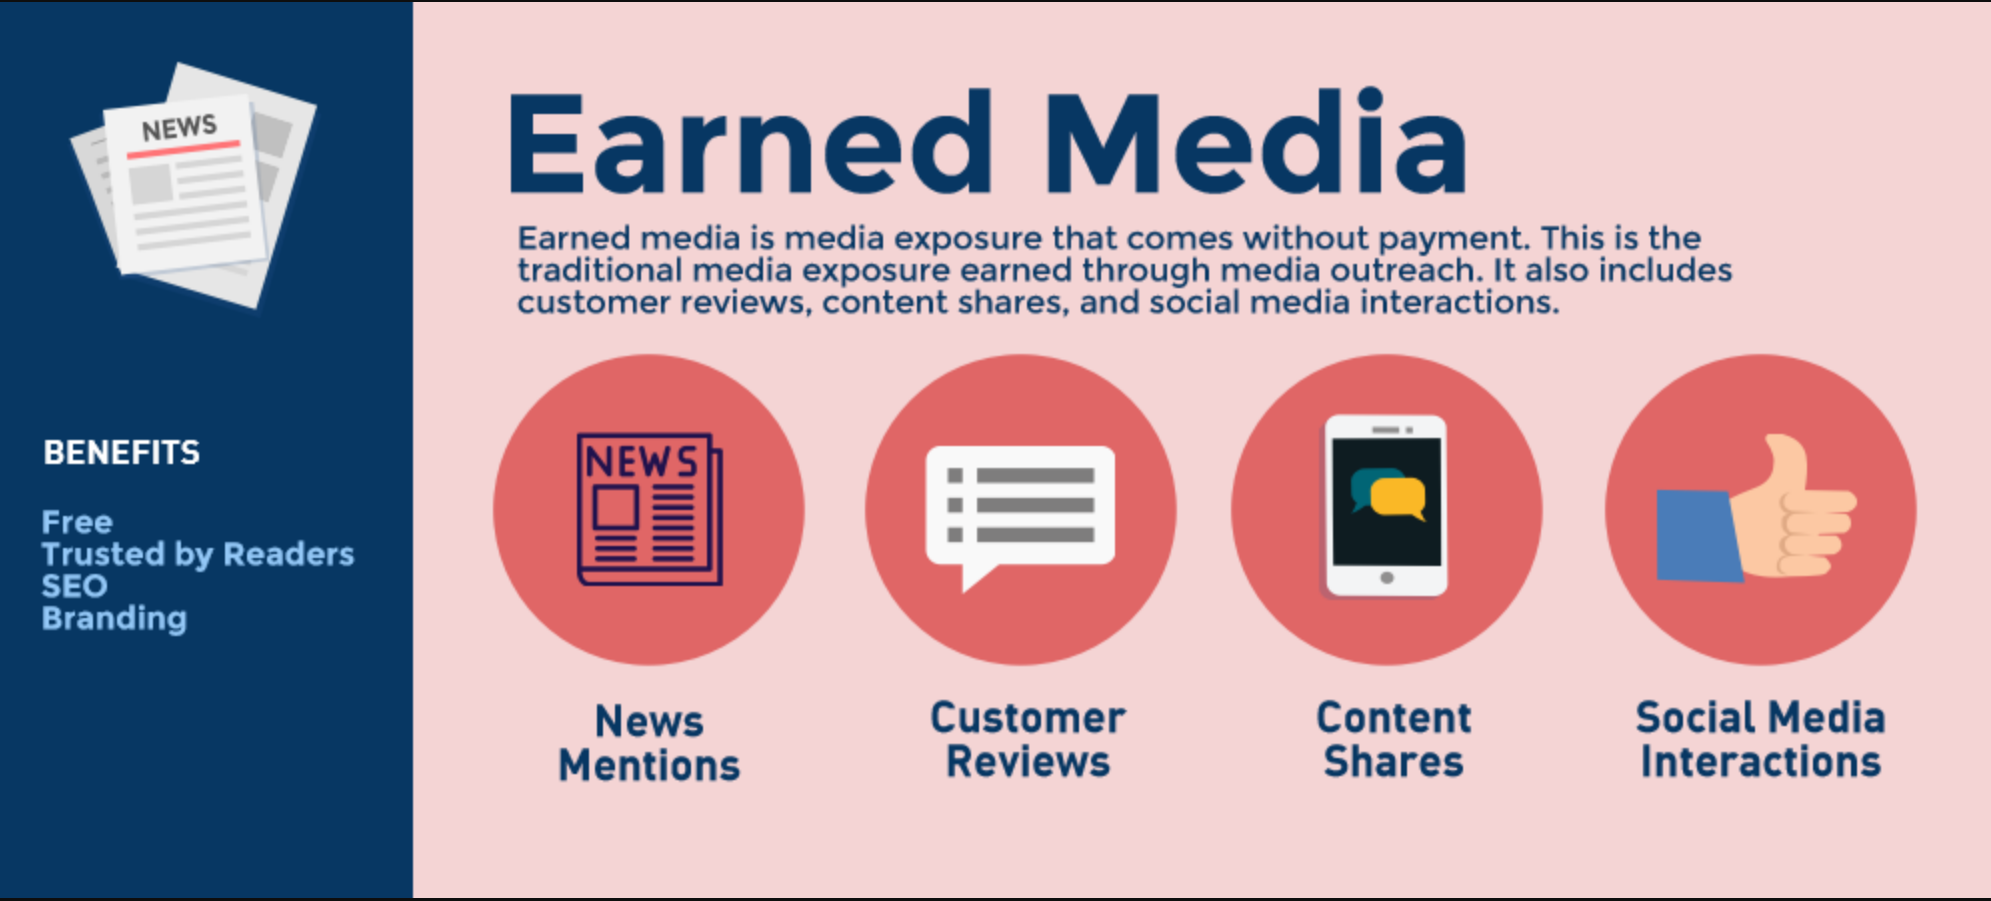 các loại earn media phổ biến